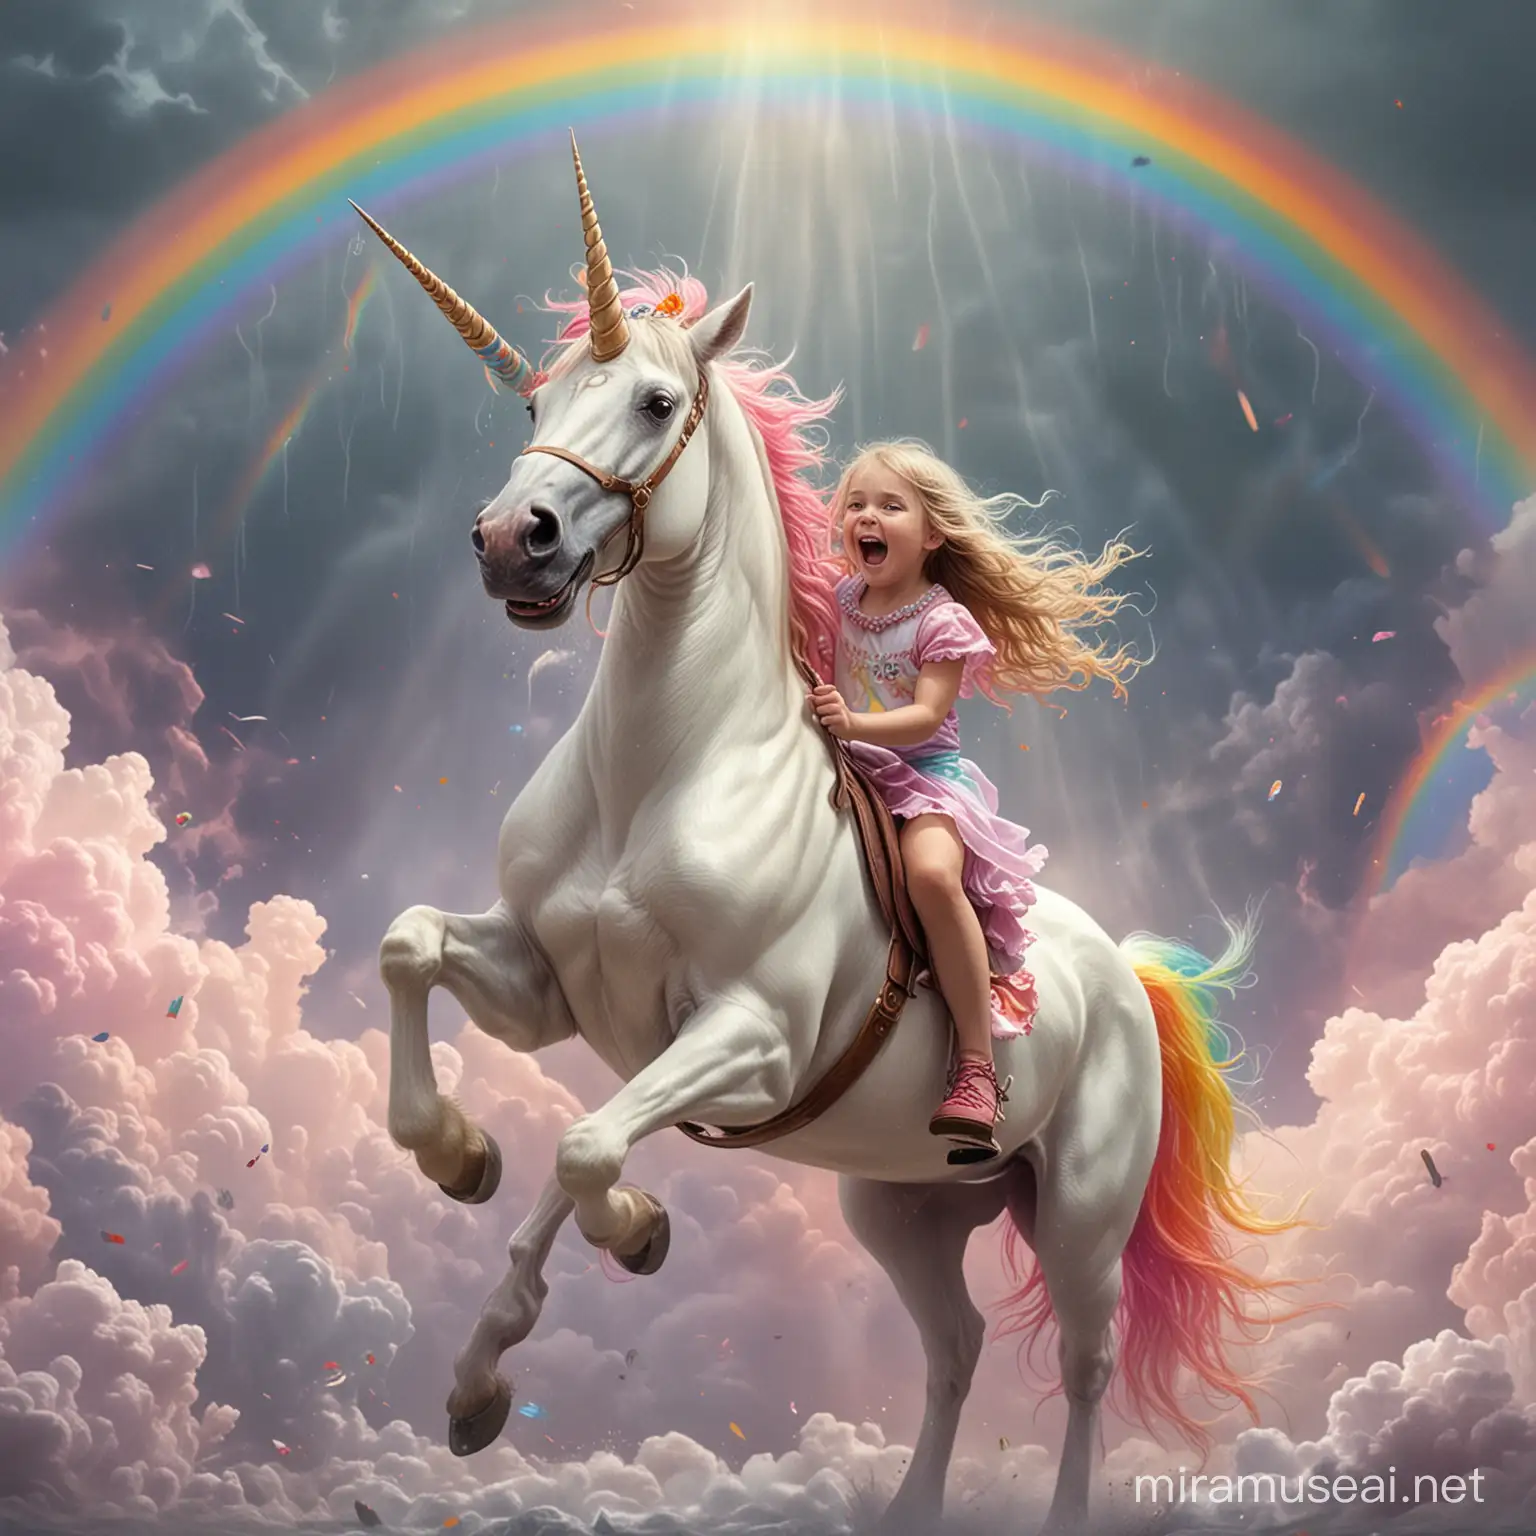 an insane demented little girl, she is riding a unicorn through a rainbow